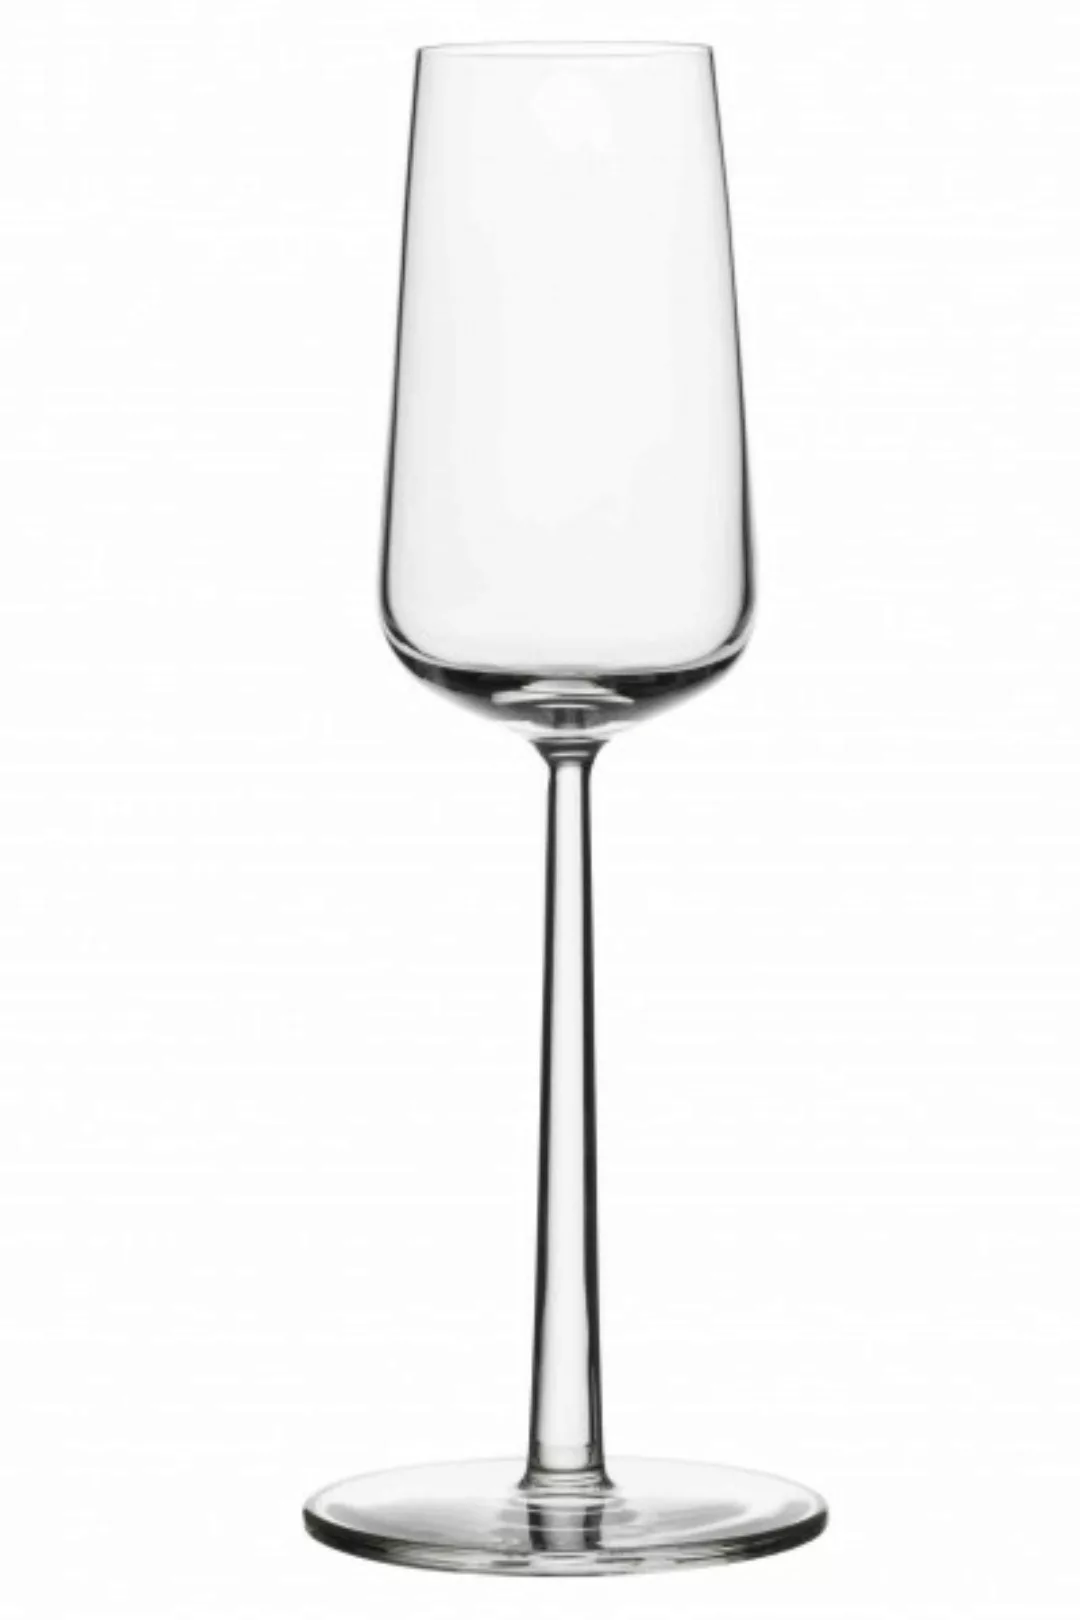 Sektgläser Essence glas transparent / 21 cl - 2er-Set - Iittala - Transpare günstig online kaufen